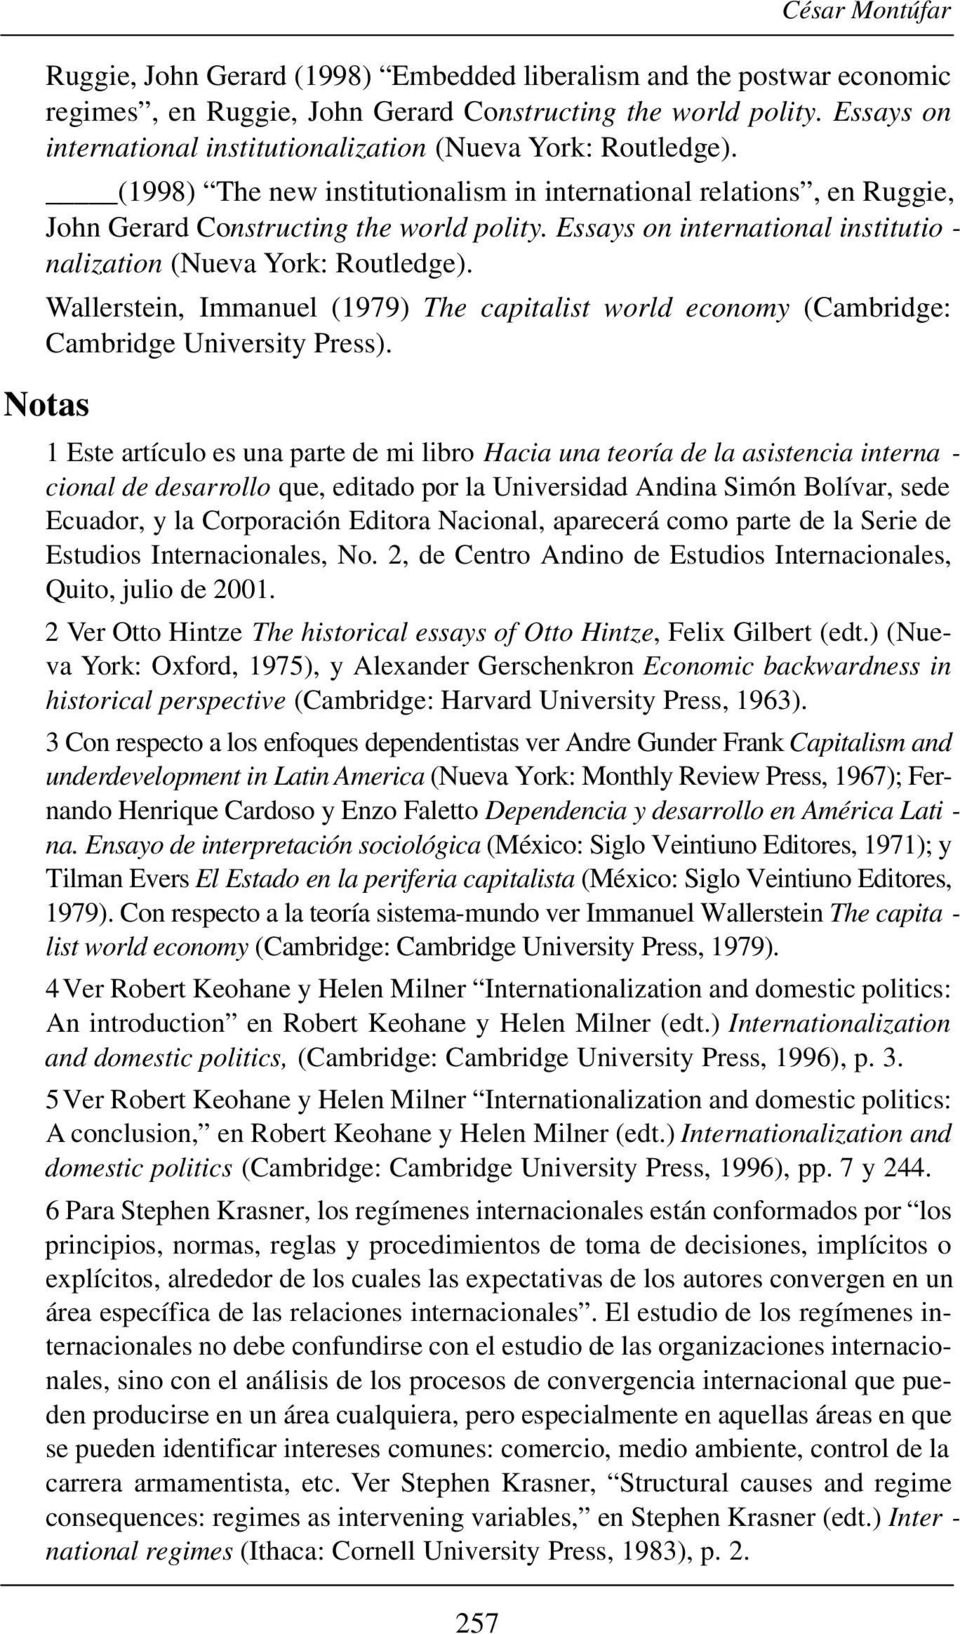 Essays on international institutio - nalization (Nueva York: Routledge). Wallerstein, Immanuel (1979) The capitalist world economy (Cambridge: Cambridge University Press).